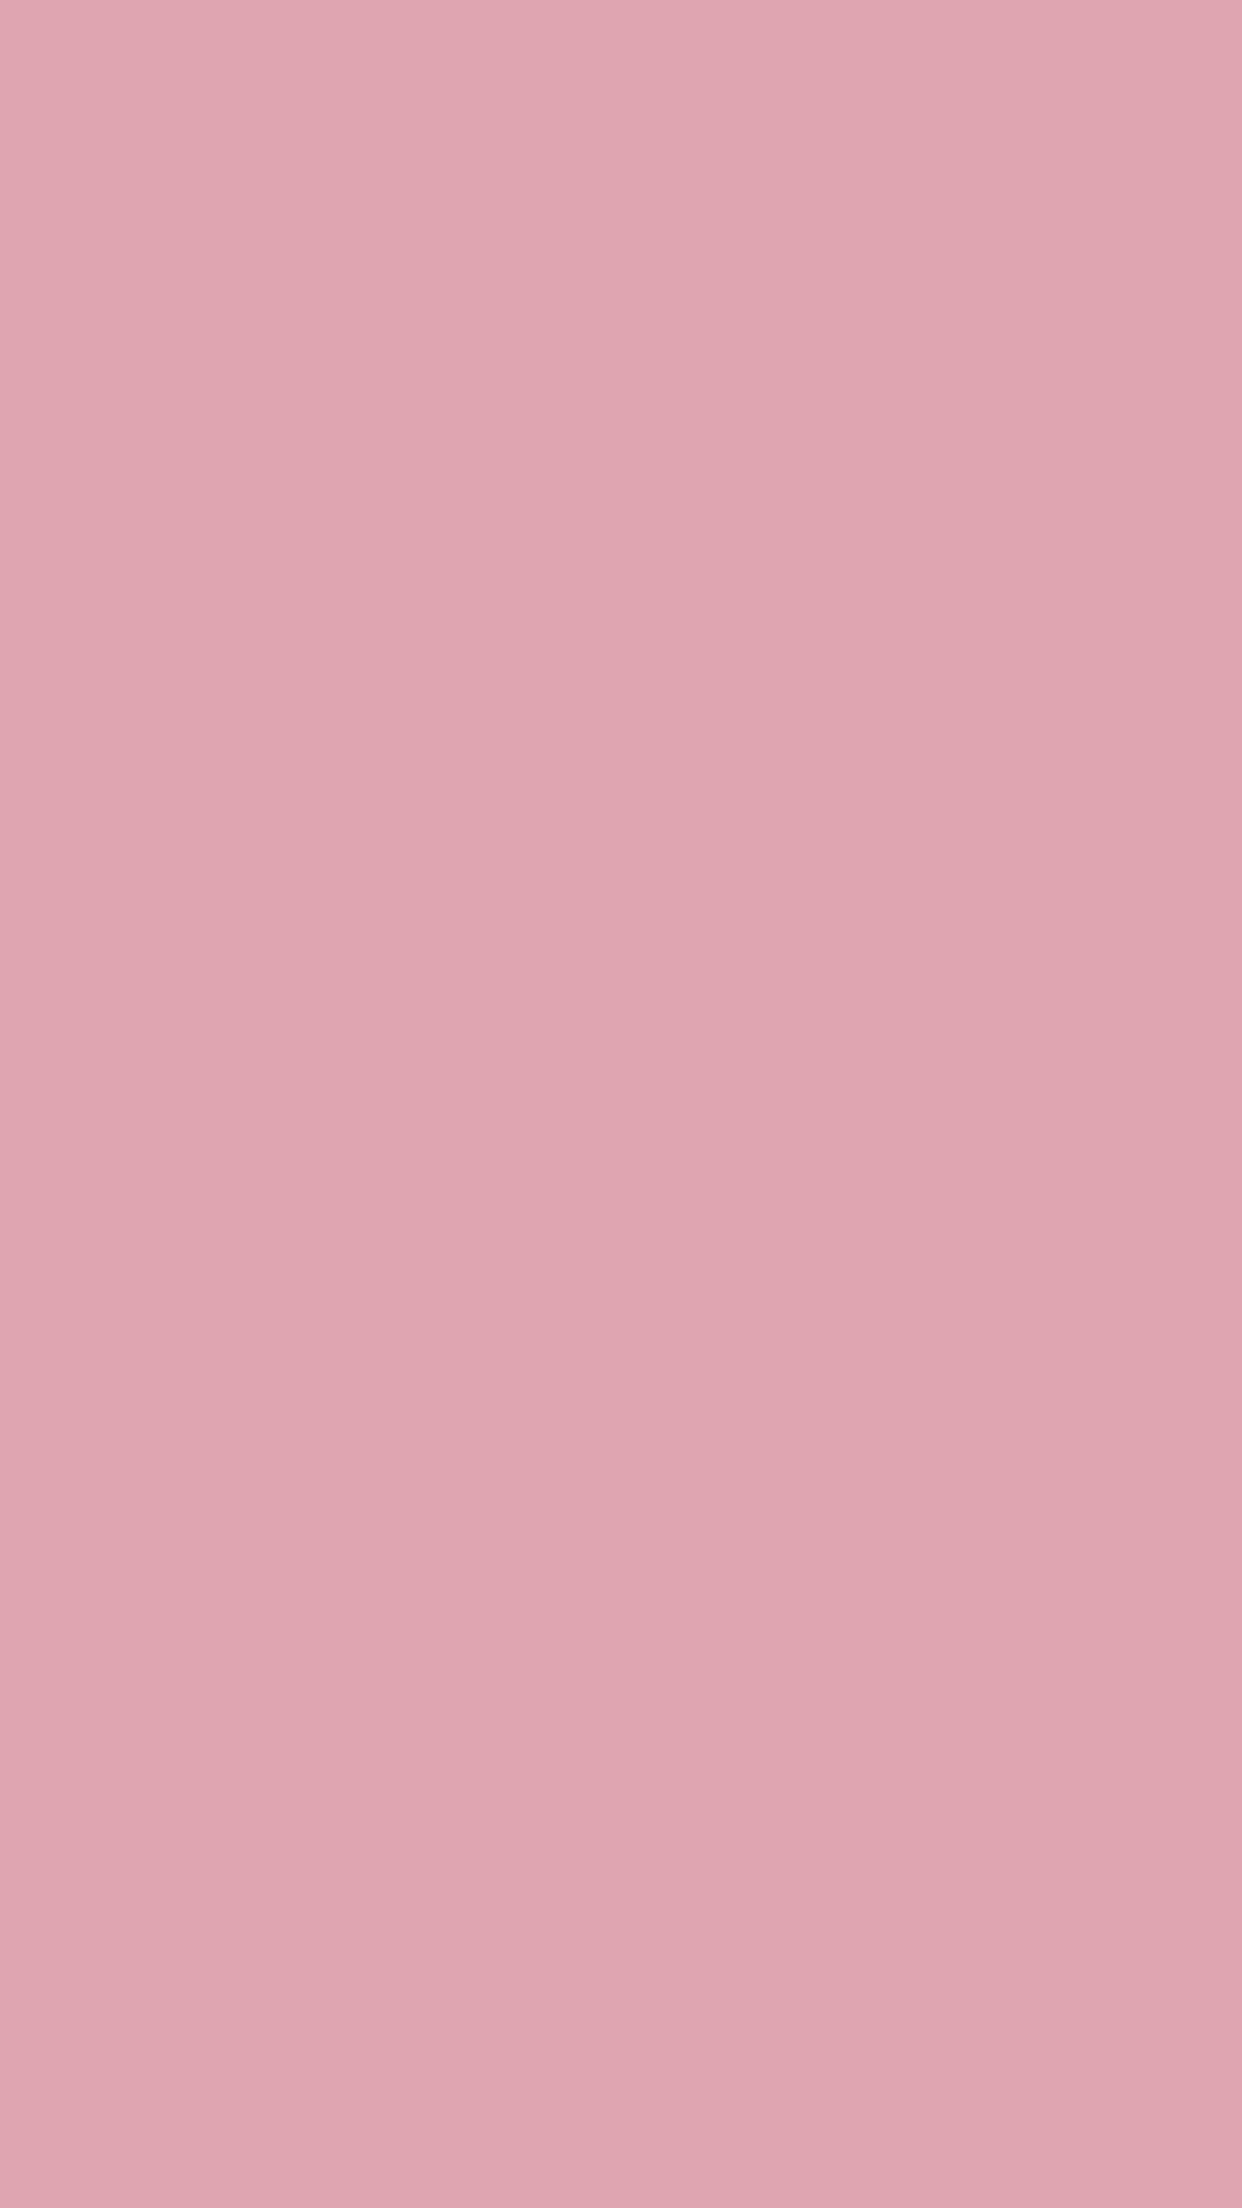 1242x2208 Rose Gold Iphone Color Gradation Blur